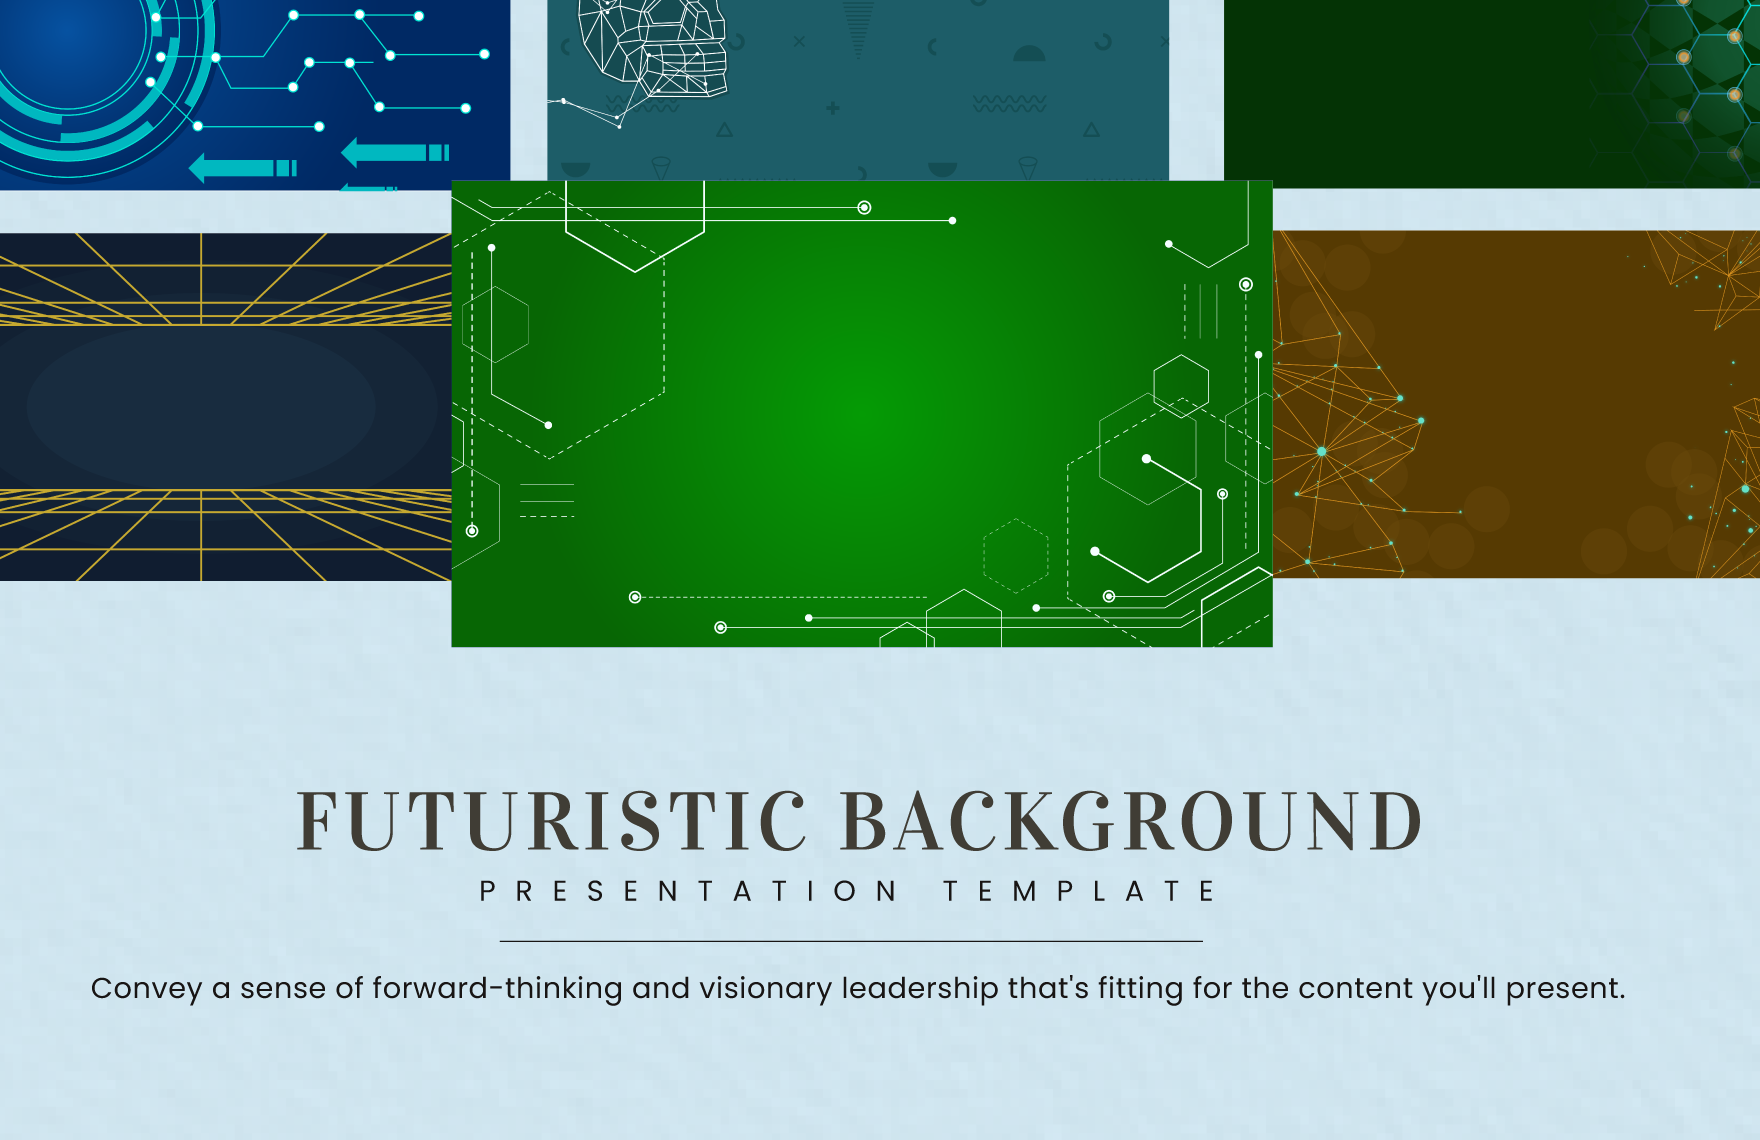 Futuristic Background Presentation Template